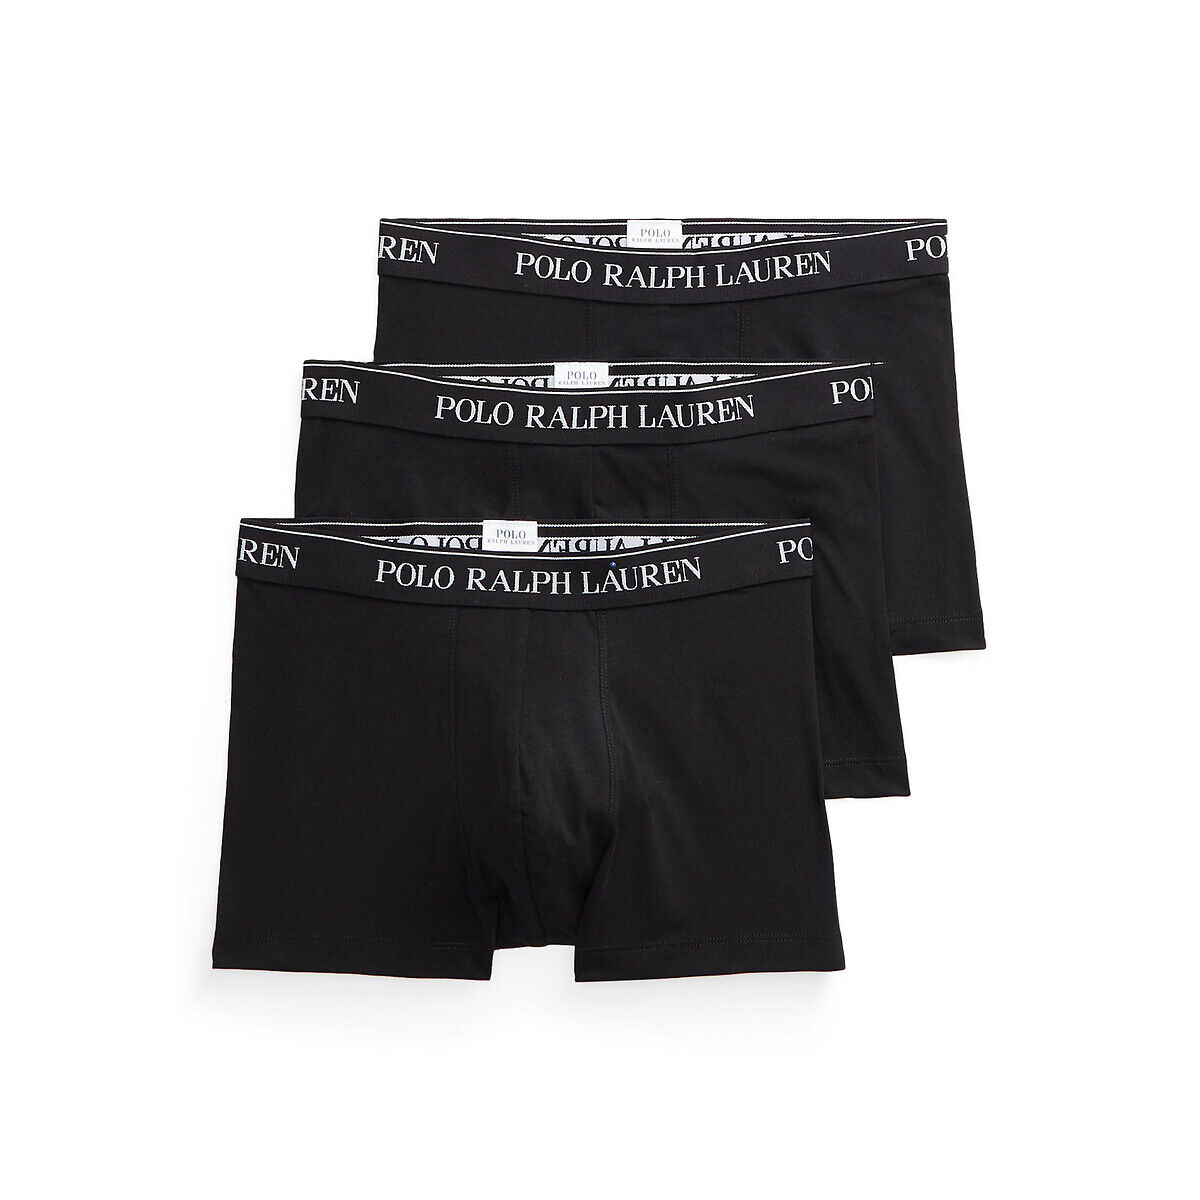 Polo Ralph Lauren Lote de 3 boxers lisos, clássicos   preto + preto + preto